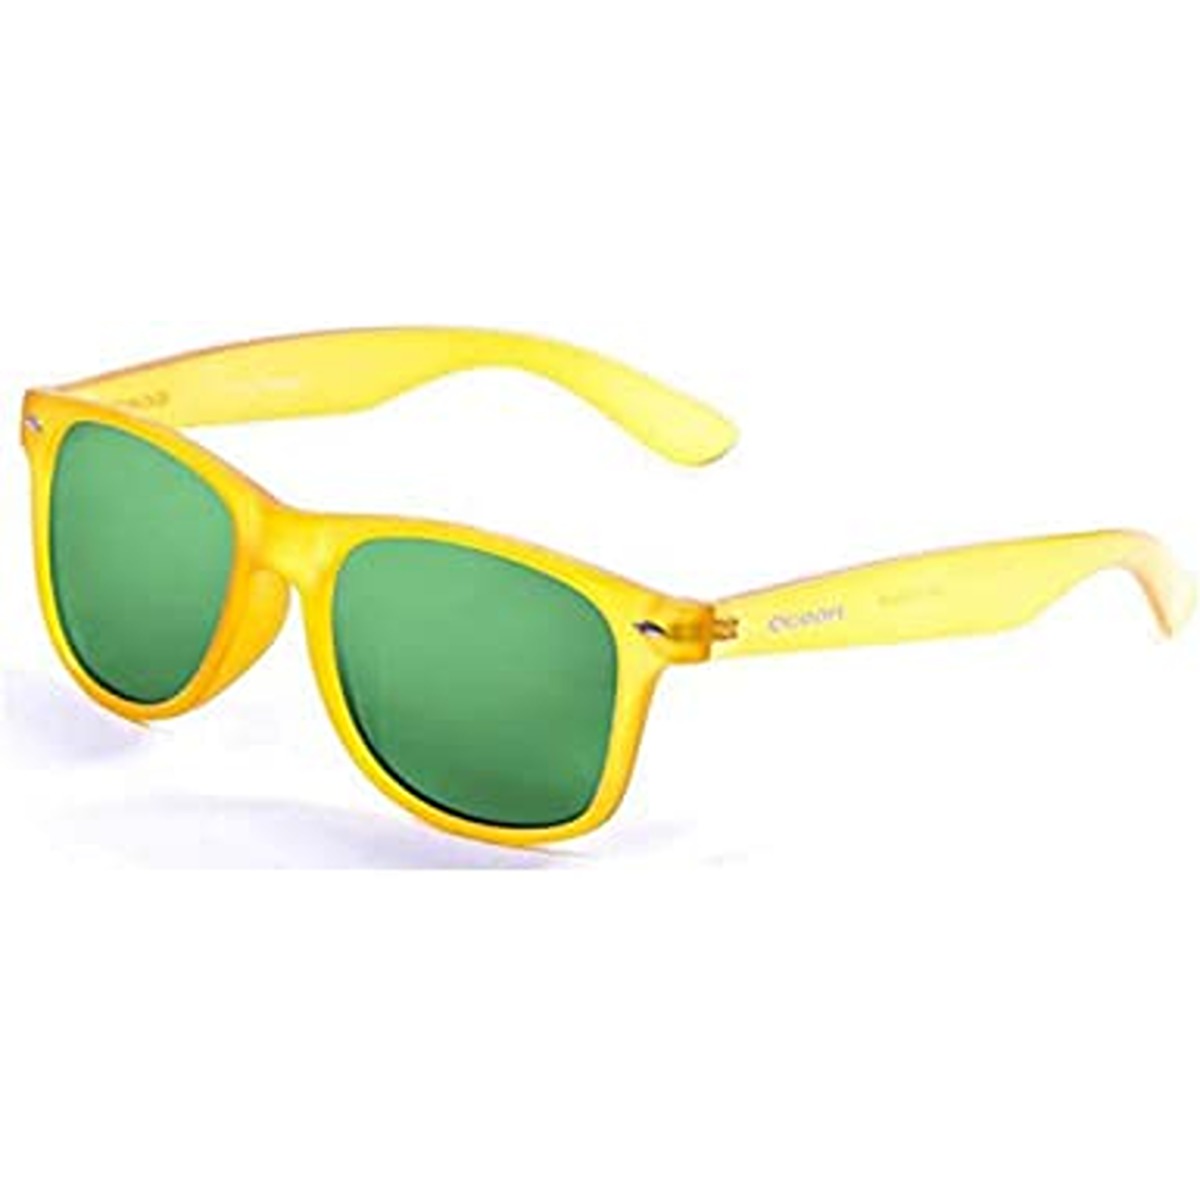 Ocean Glasses Beach Sunglasses For Men - Yellow